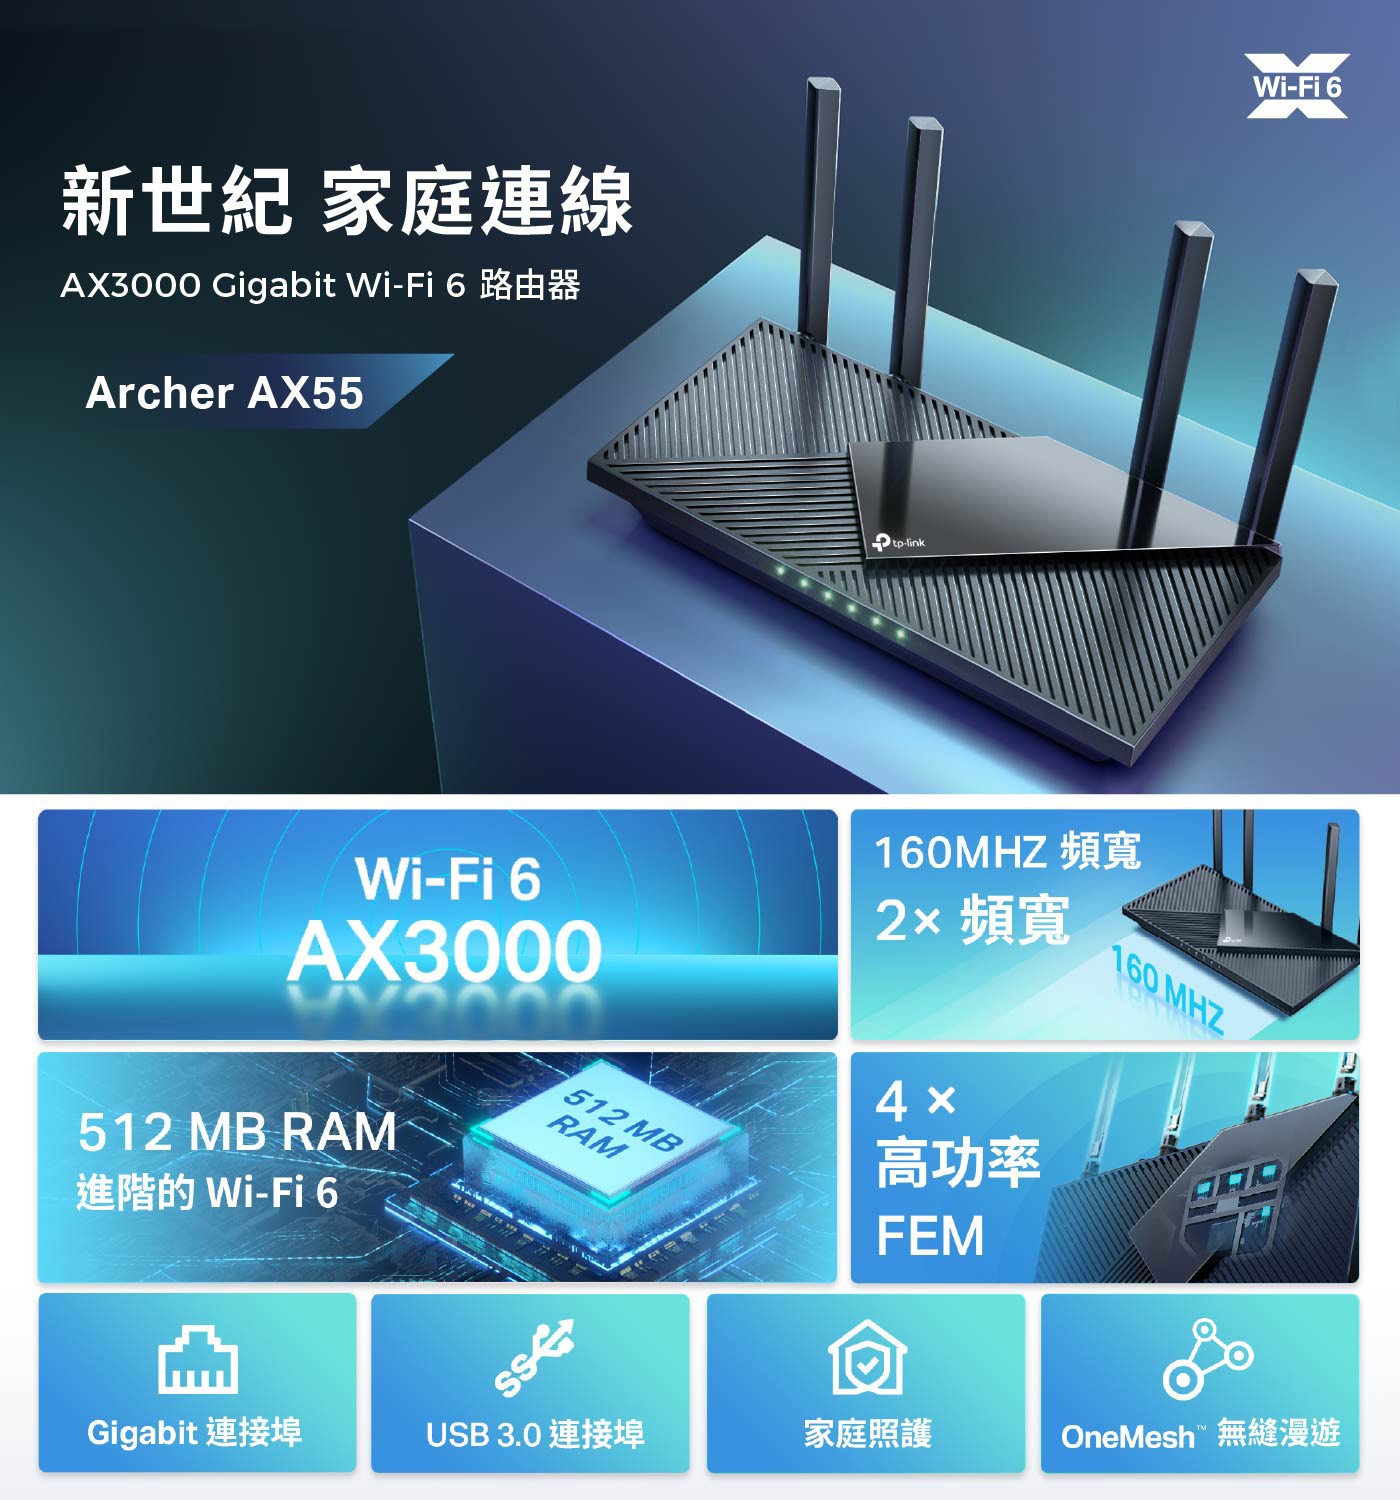 TP-Link Archer AX55 AX3000 雙頻 Gigabit Wi-Fi 6 路由器新世紀家庭連線2頻寬512MB記憶體高功能FEM